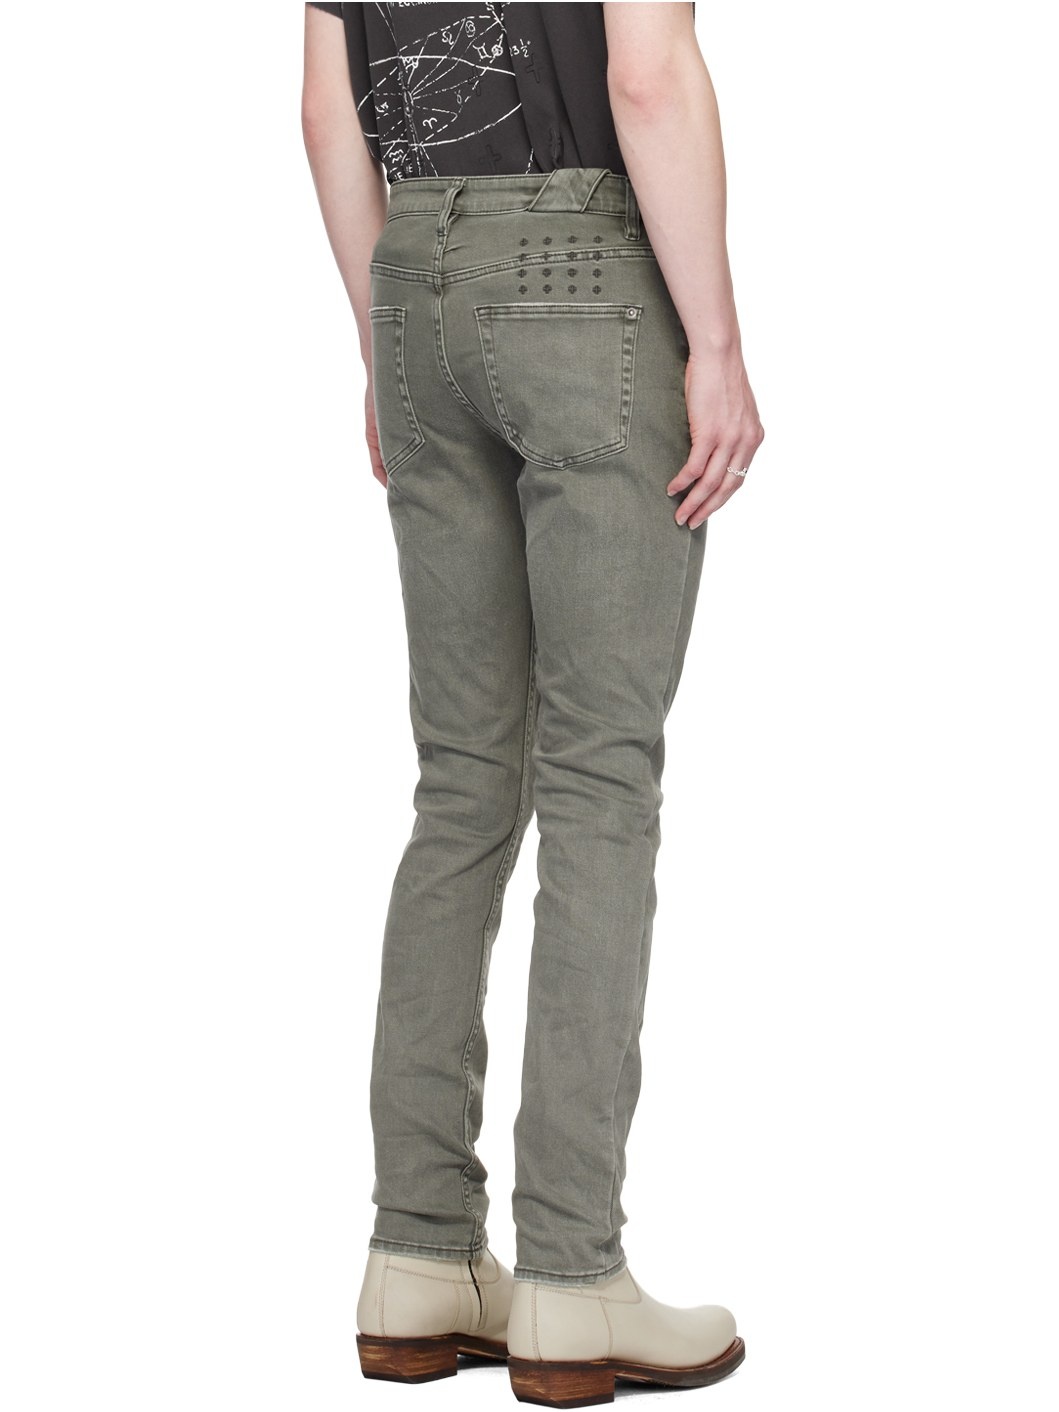 Gray Chitch Surplus Jeans - 3